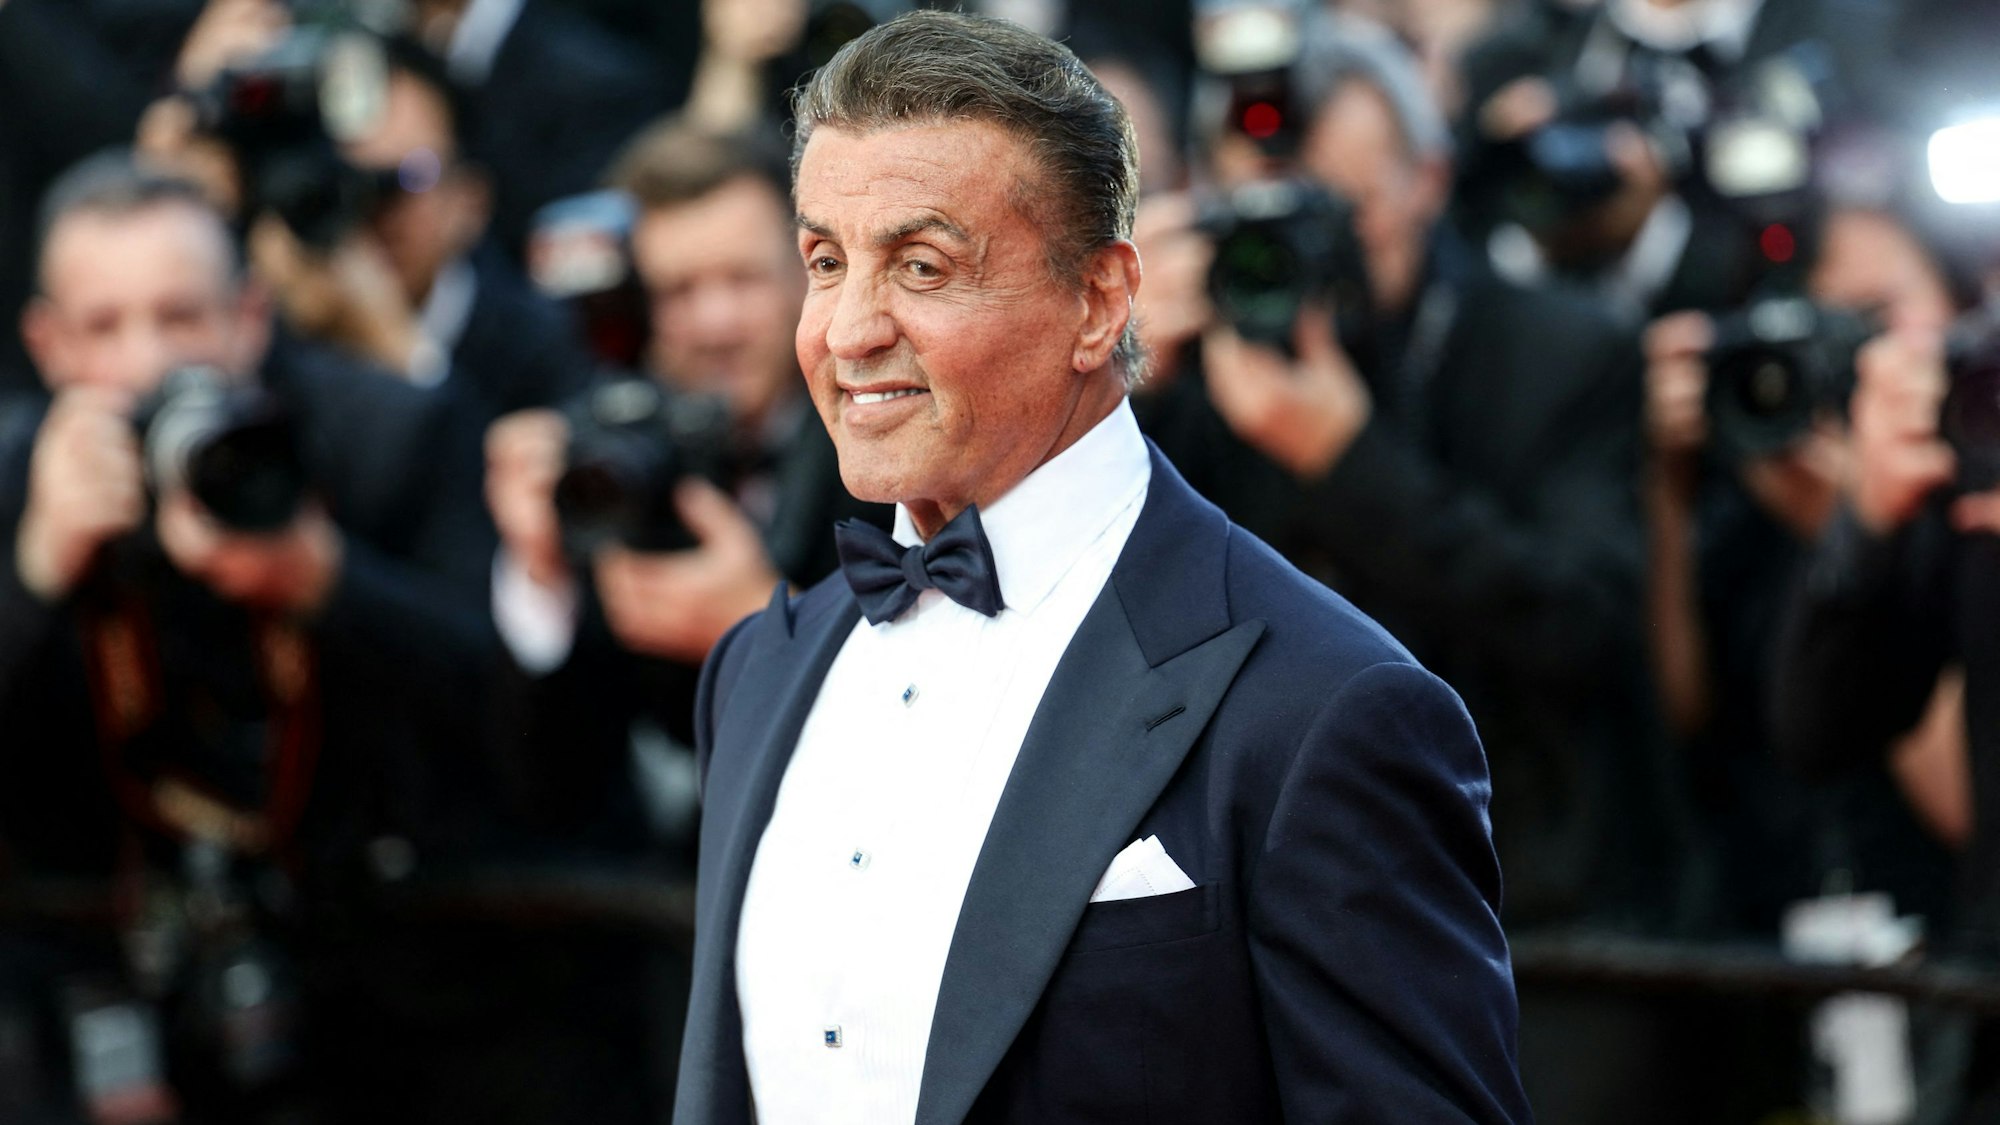 Schauspieler Sylvester Stallone kommt beim 72. Cannes Filmfestival zur Premiere des Films "The Specials (Hors Normes)".